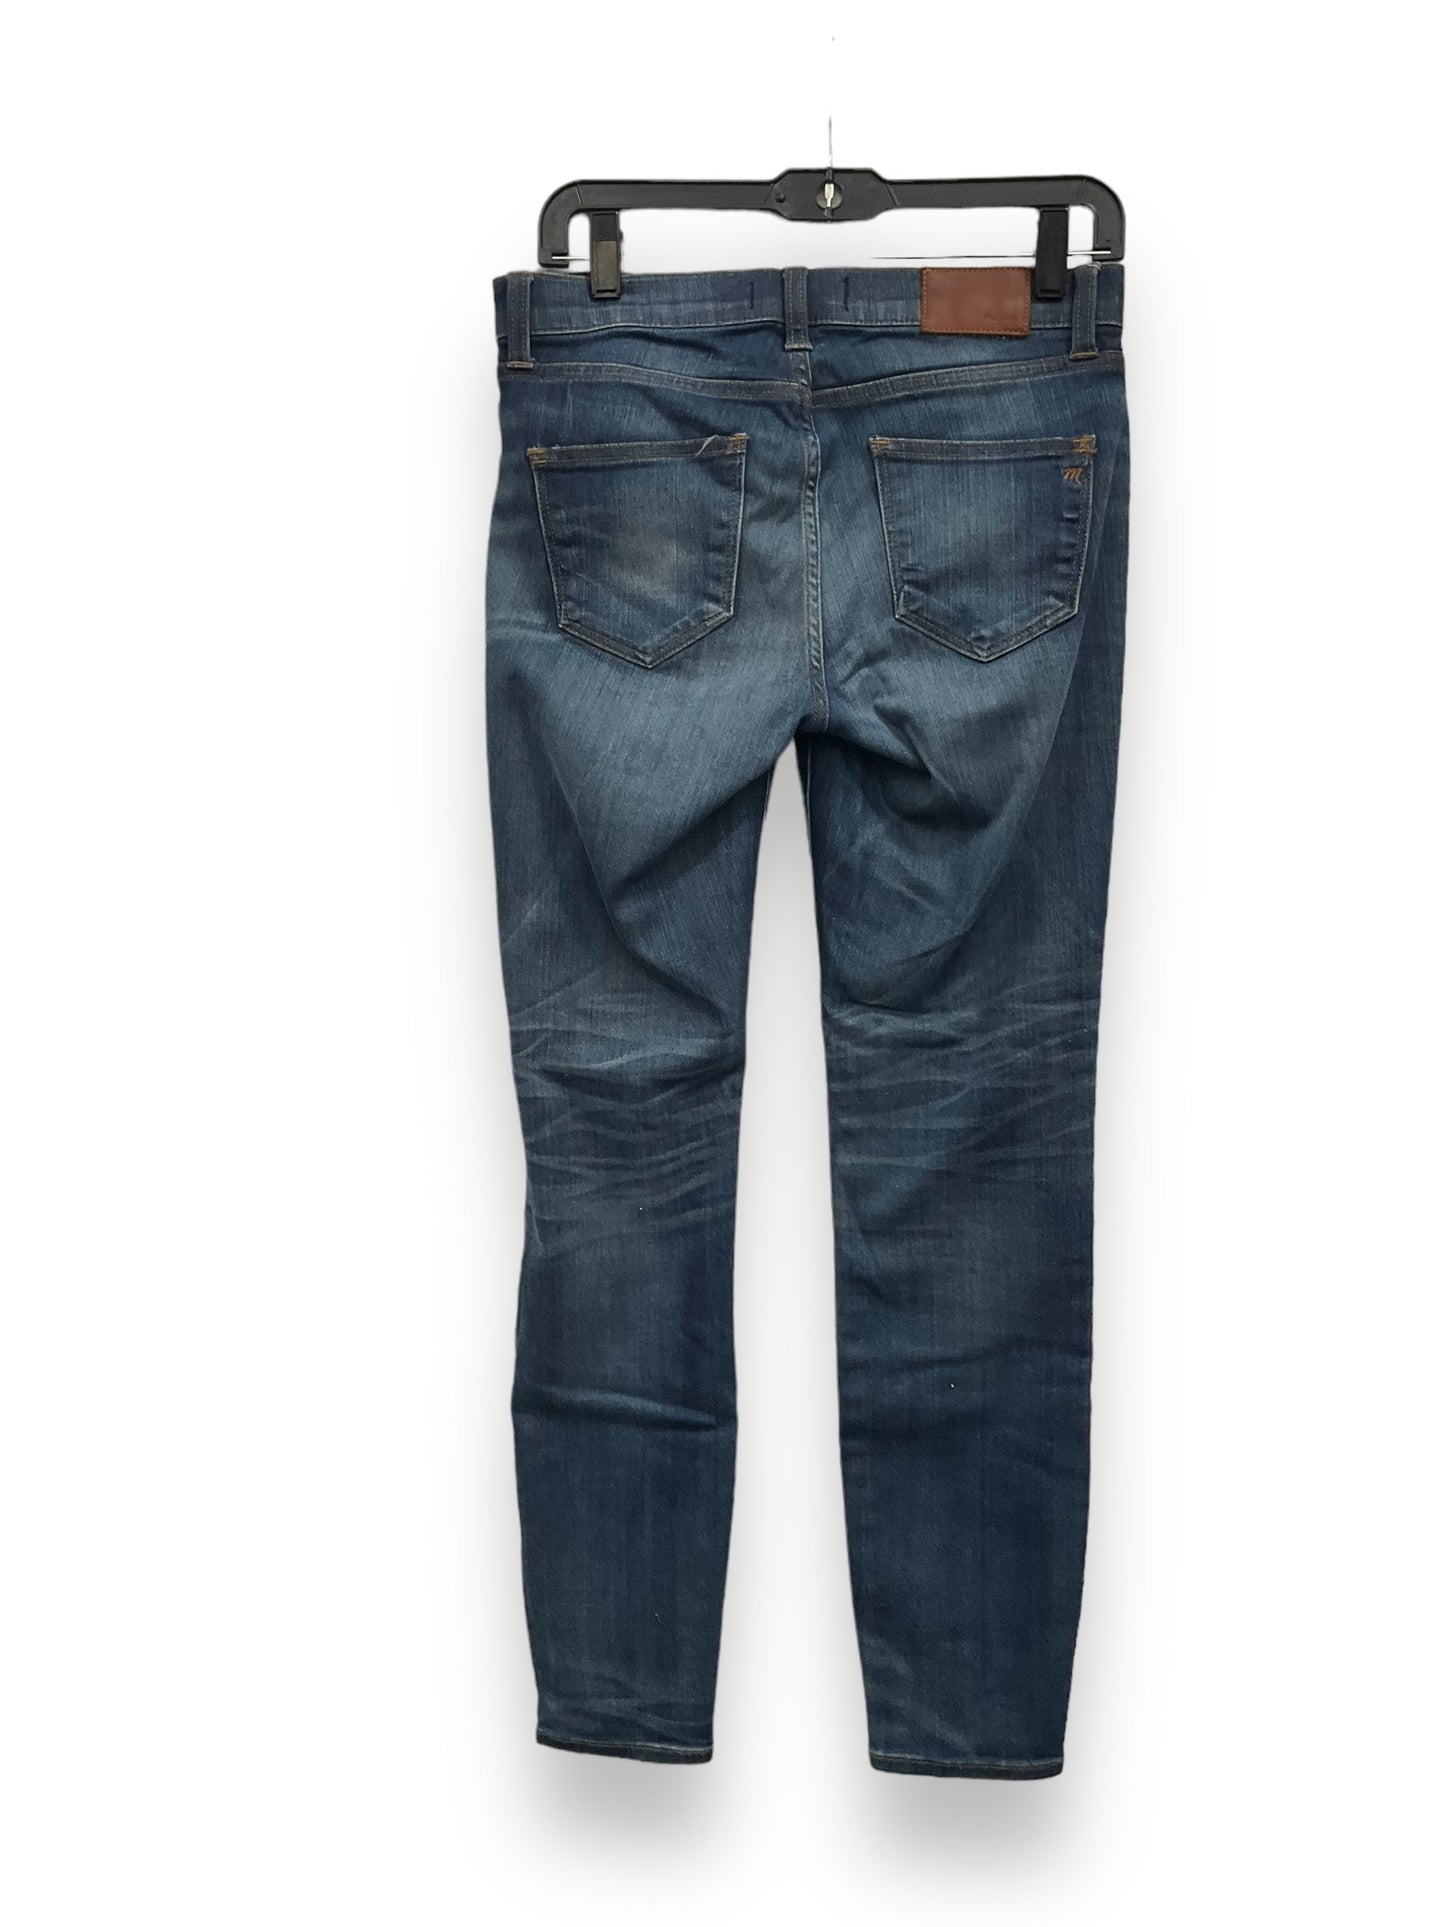 Blue Denim Jeans Straight Madewell, Size 4